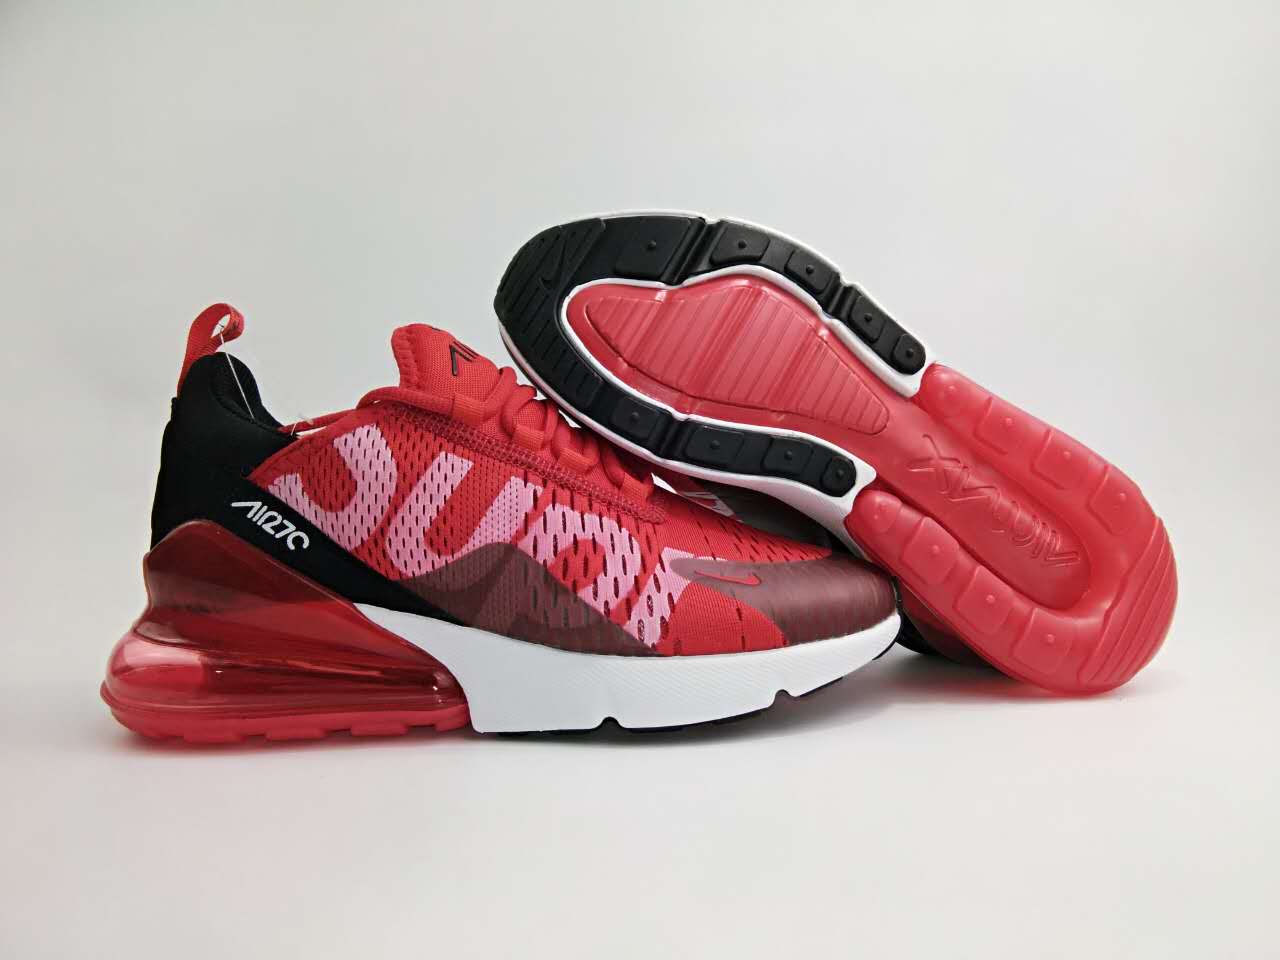 New Nike Air Max Flair 270 Nano Red Black White Shoes